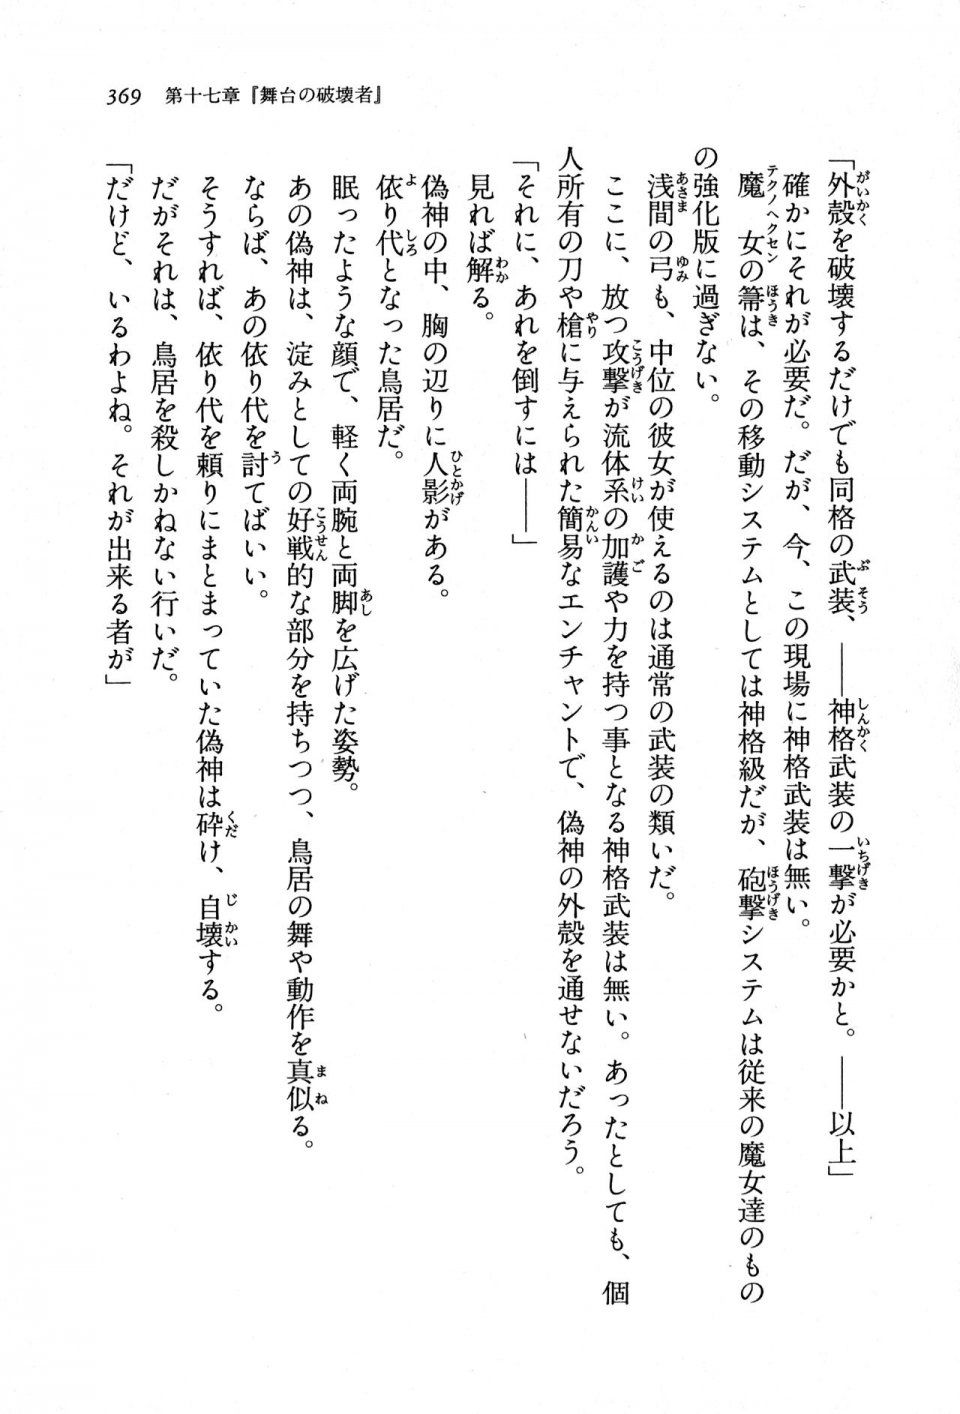 Kyoukai Senjou no Horizon BD Special Mininovel Vol 8(4B) - Photo #373